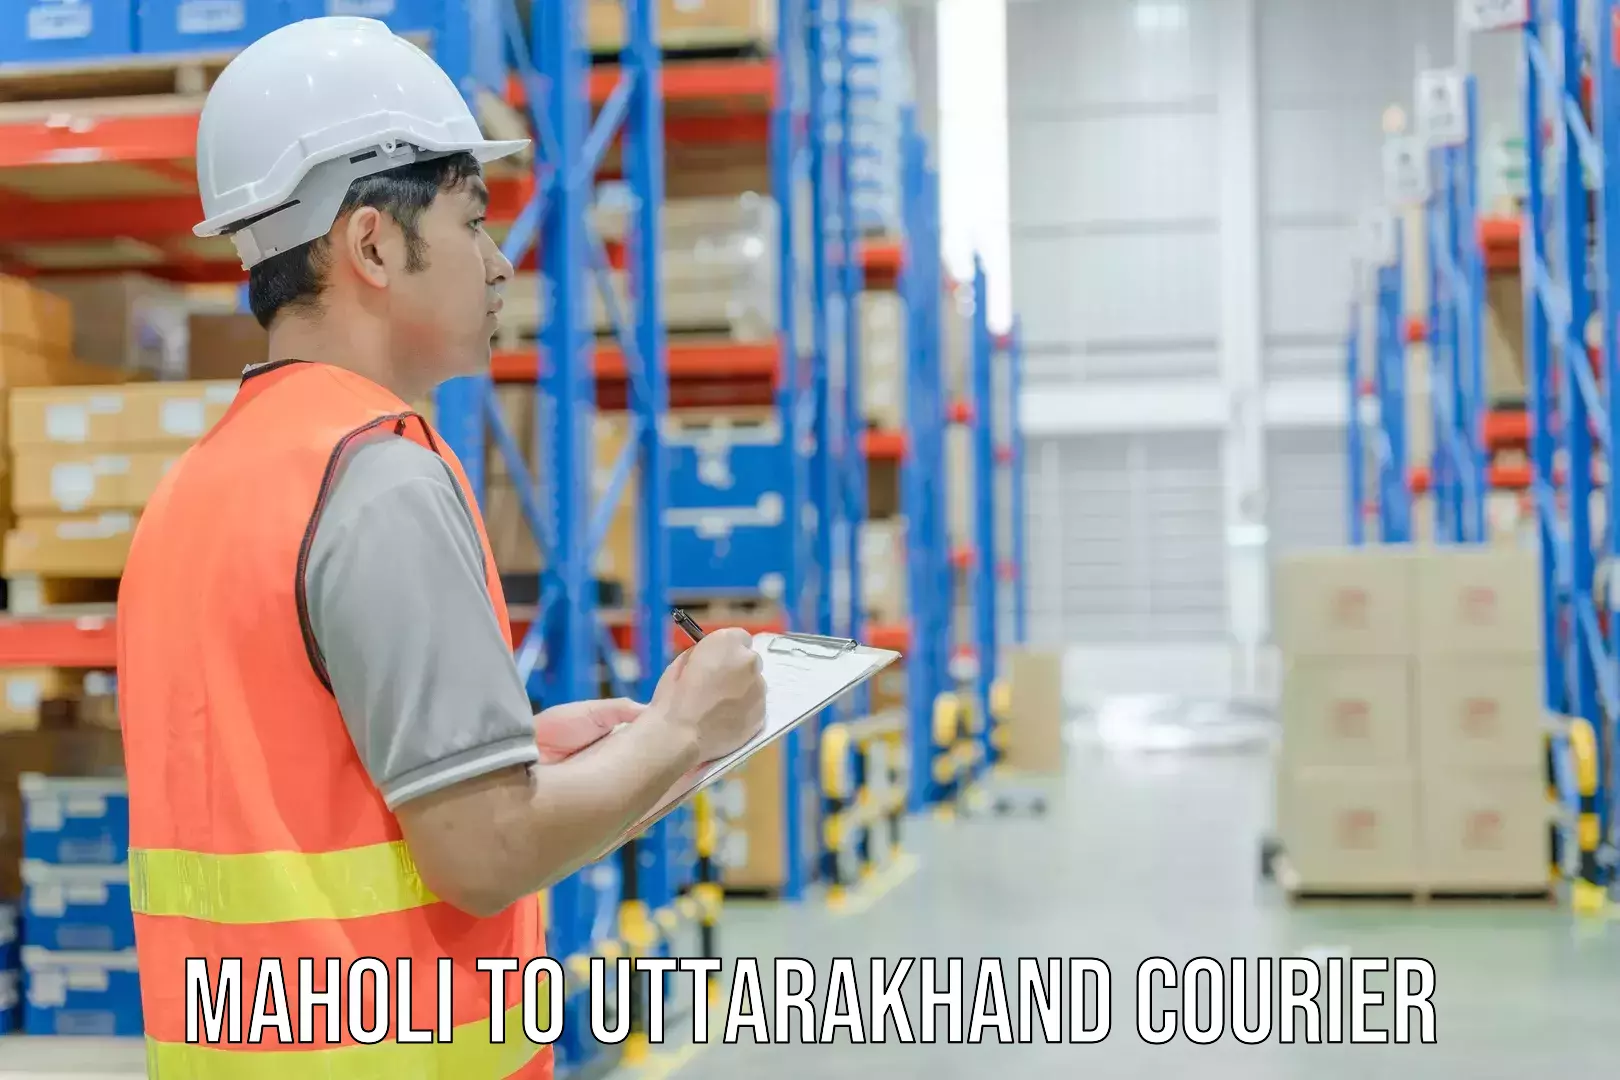 Courier service booking Maholi to Uttarakhand